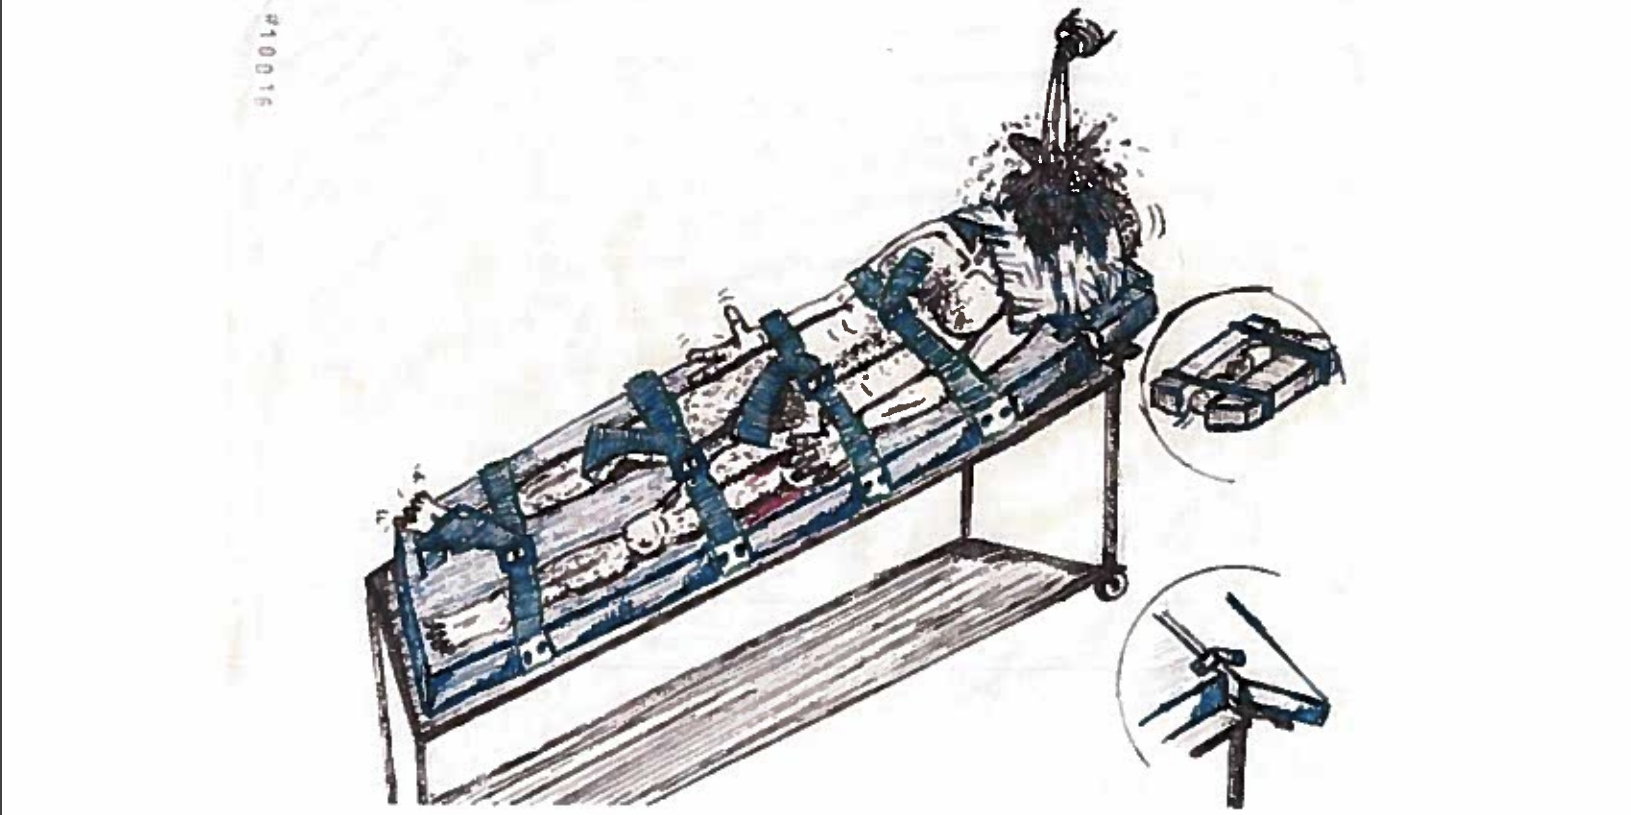 A sketch by Abu Zubaydah depicts the waterboarding he endured in CIA custody.